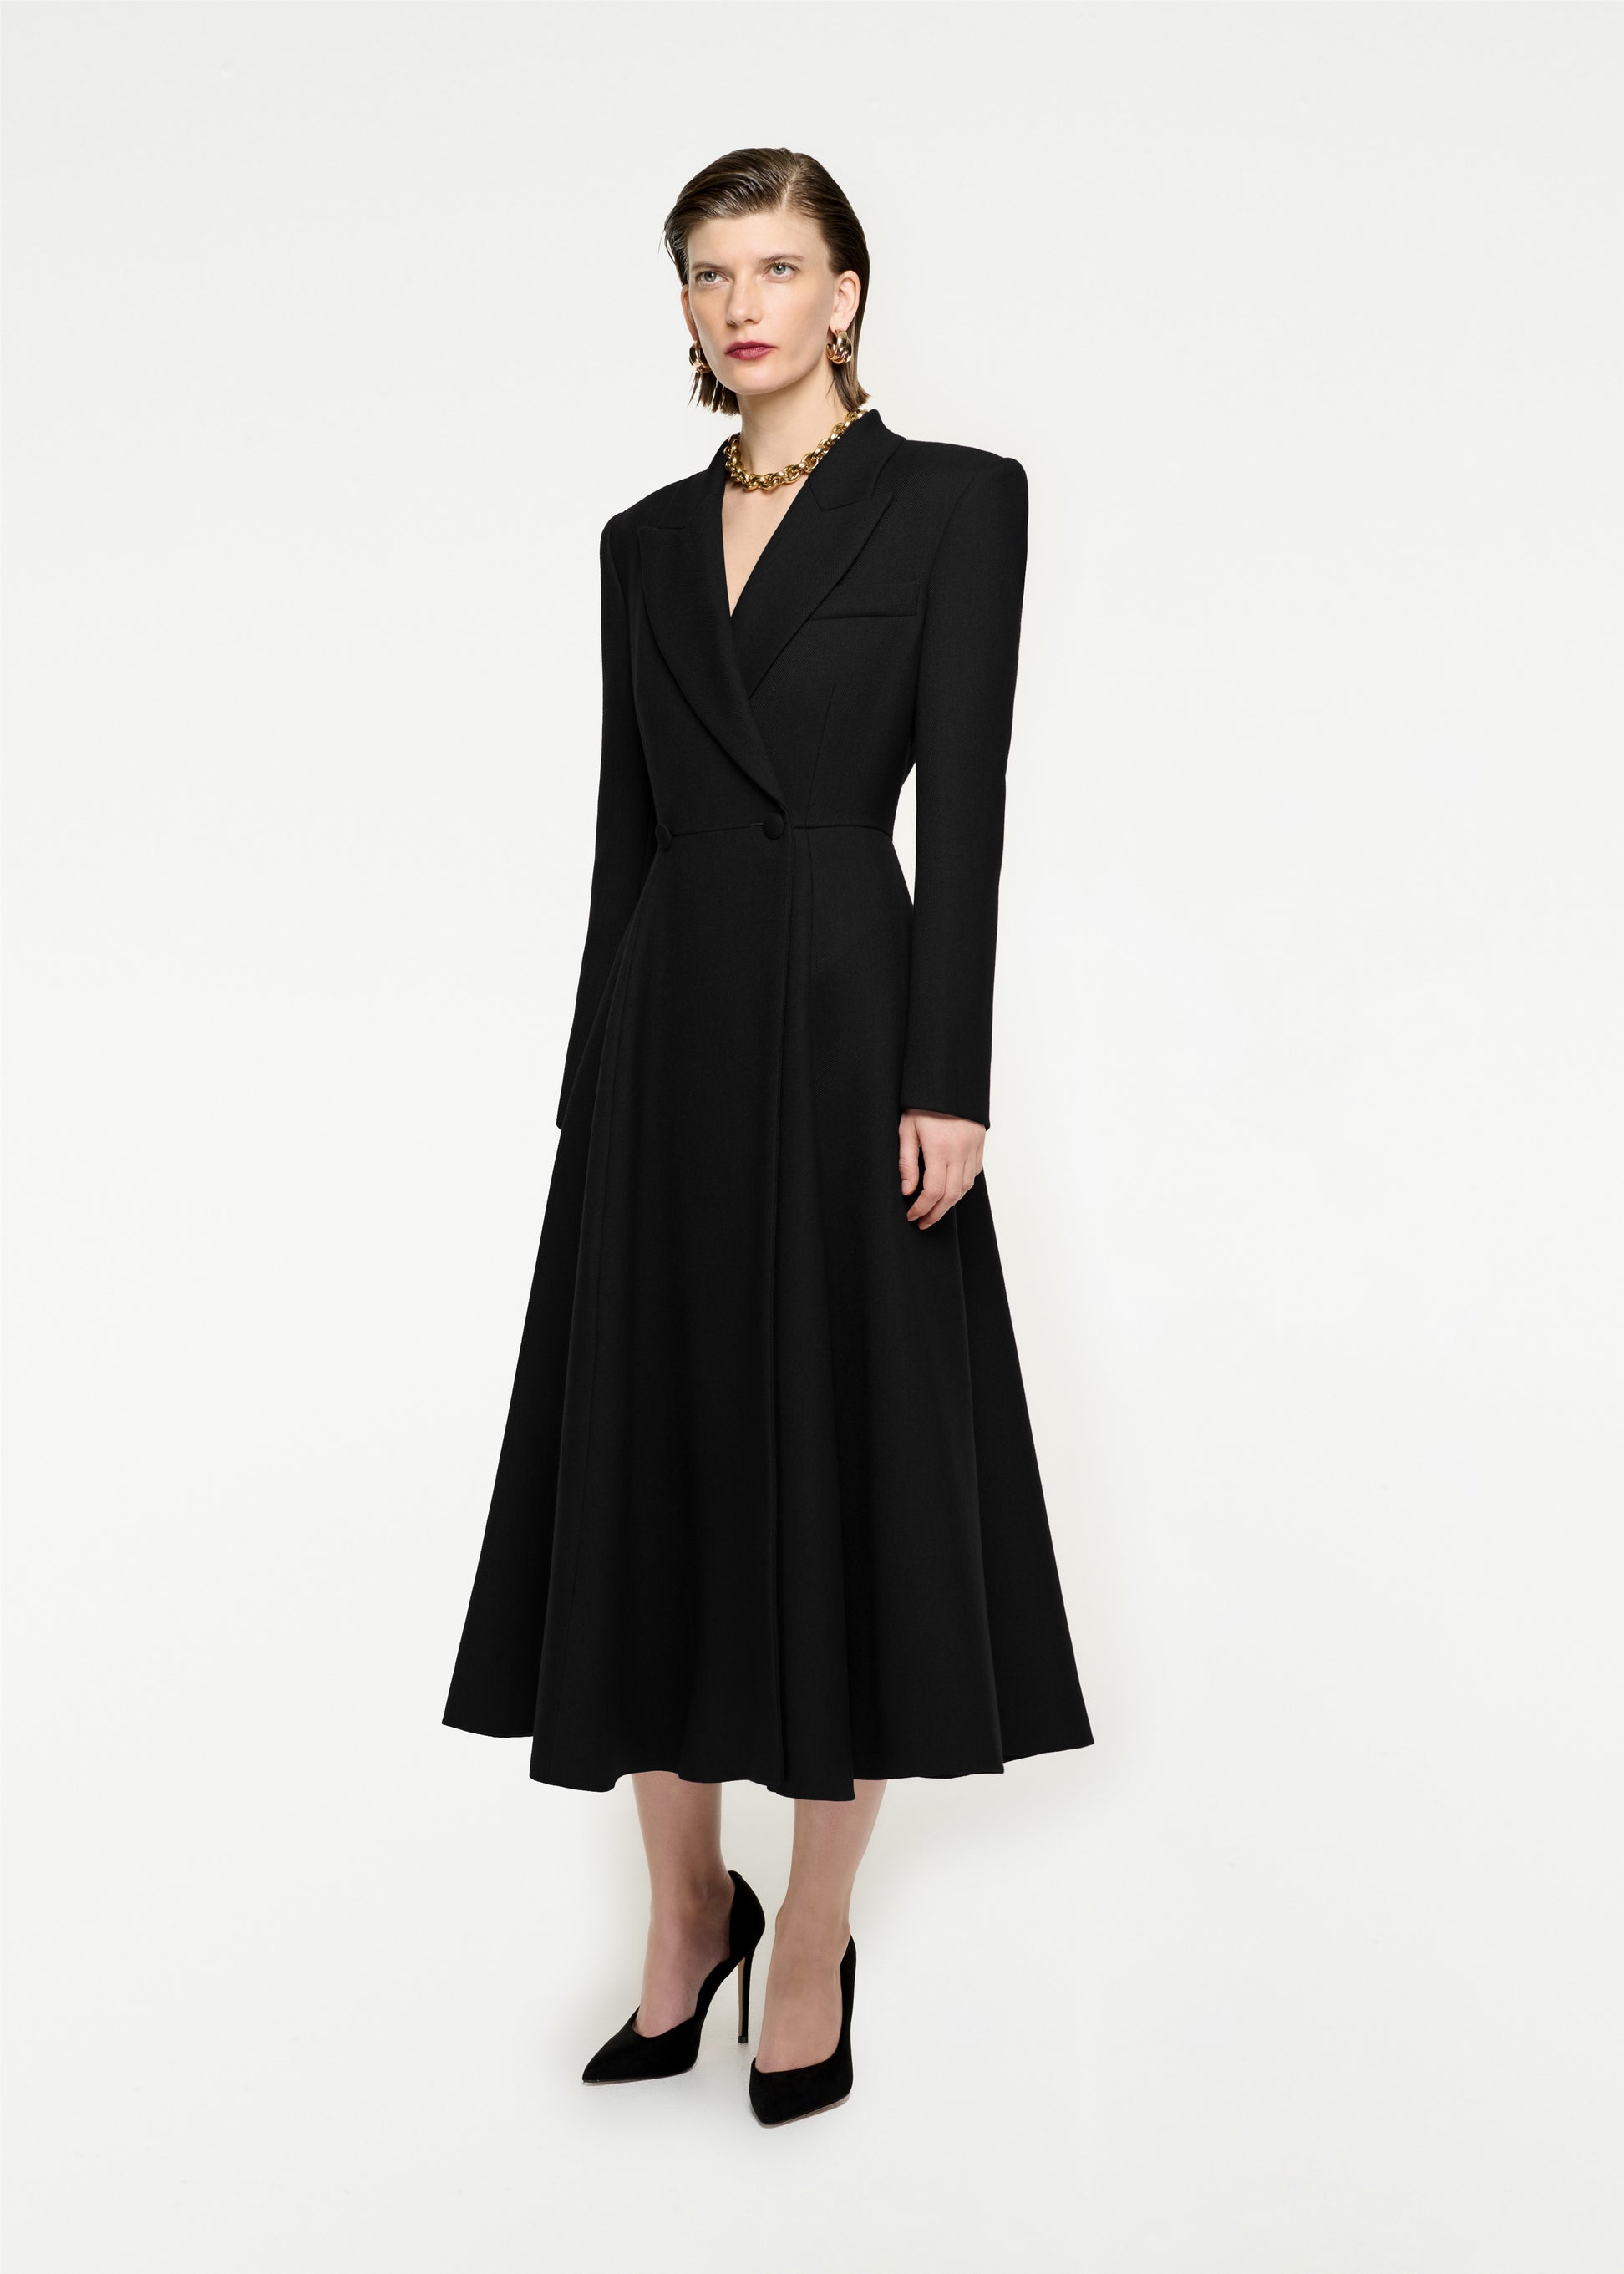 Woman wearing the Wool Twill Coat in Black